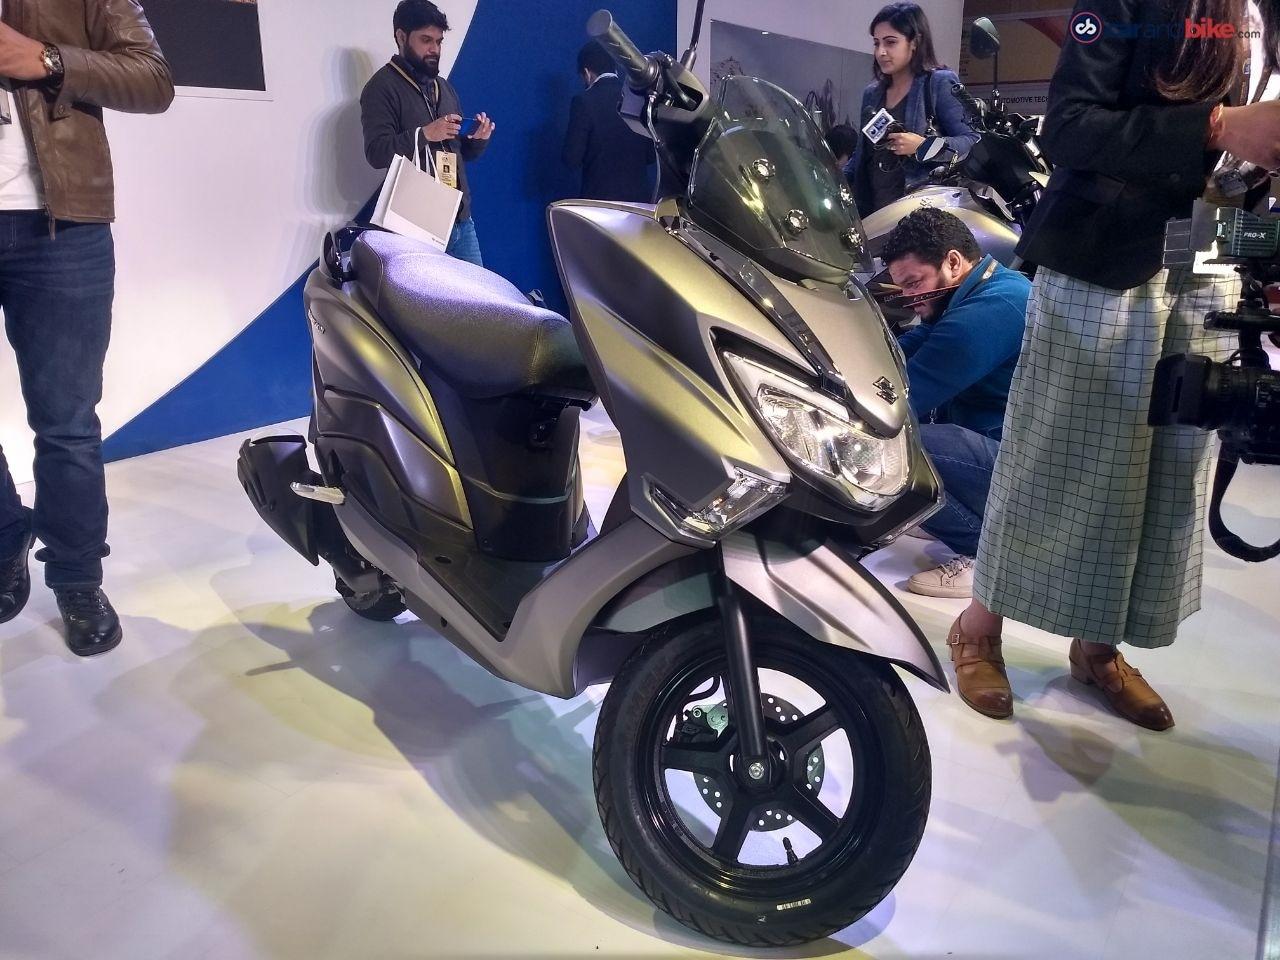 Auto Expo 2018: Suzuki Burgman Unveiled